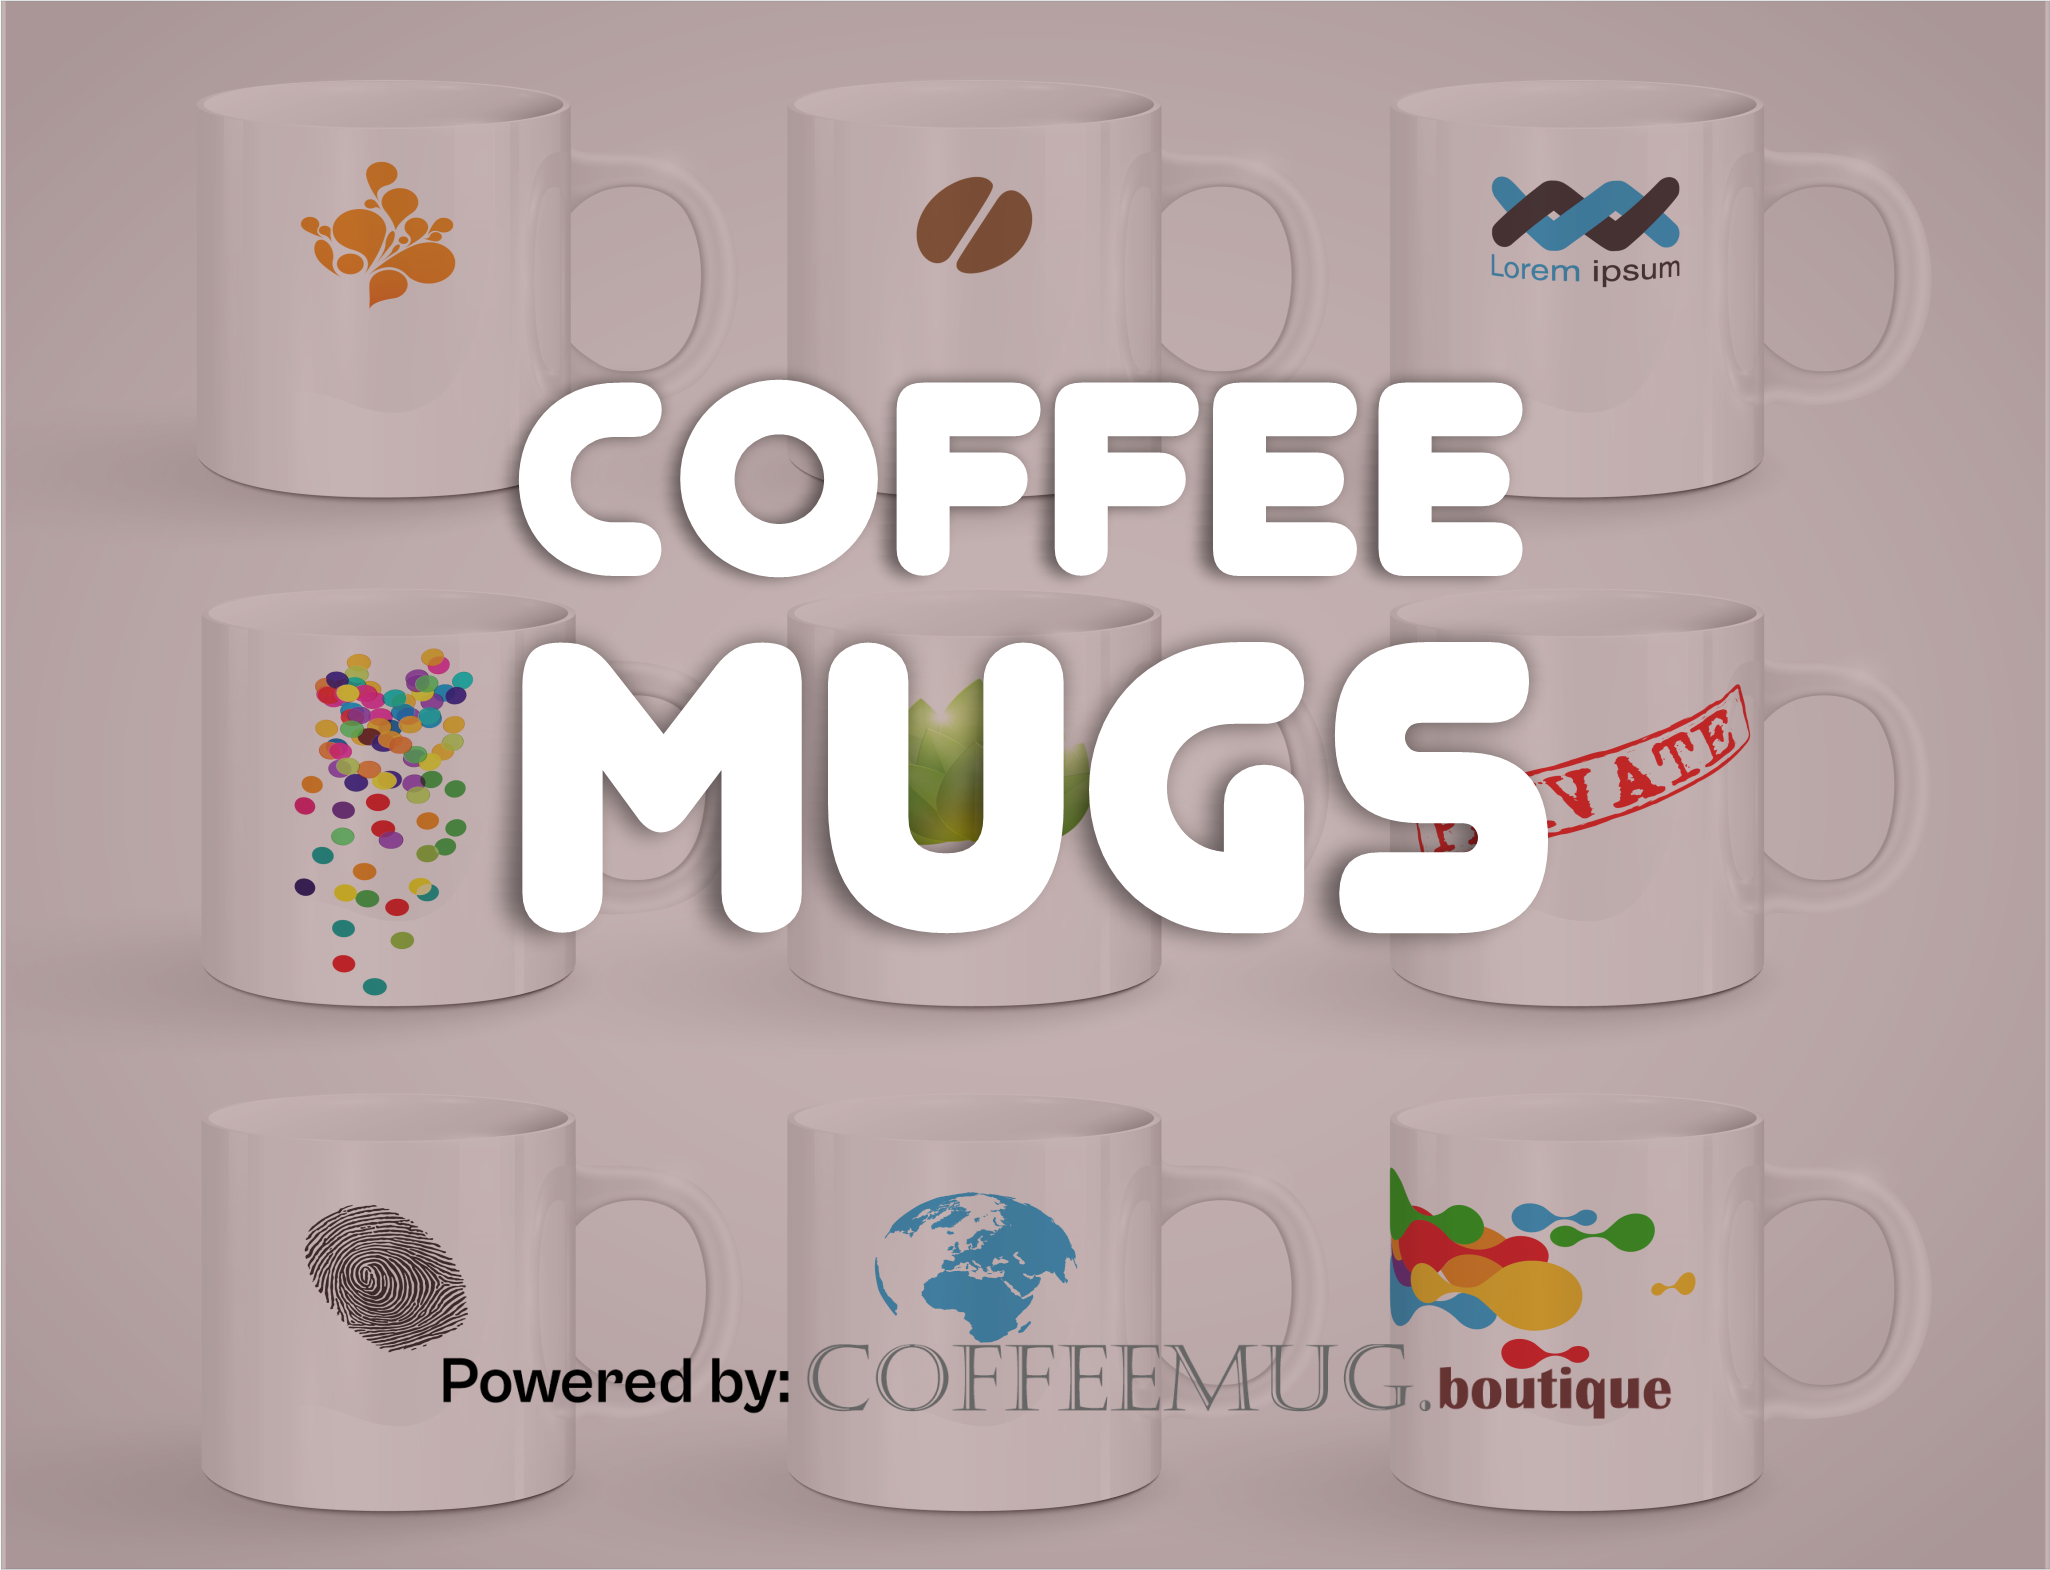 Coffee Mugs by CoffeeMug Boutique